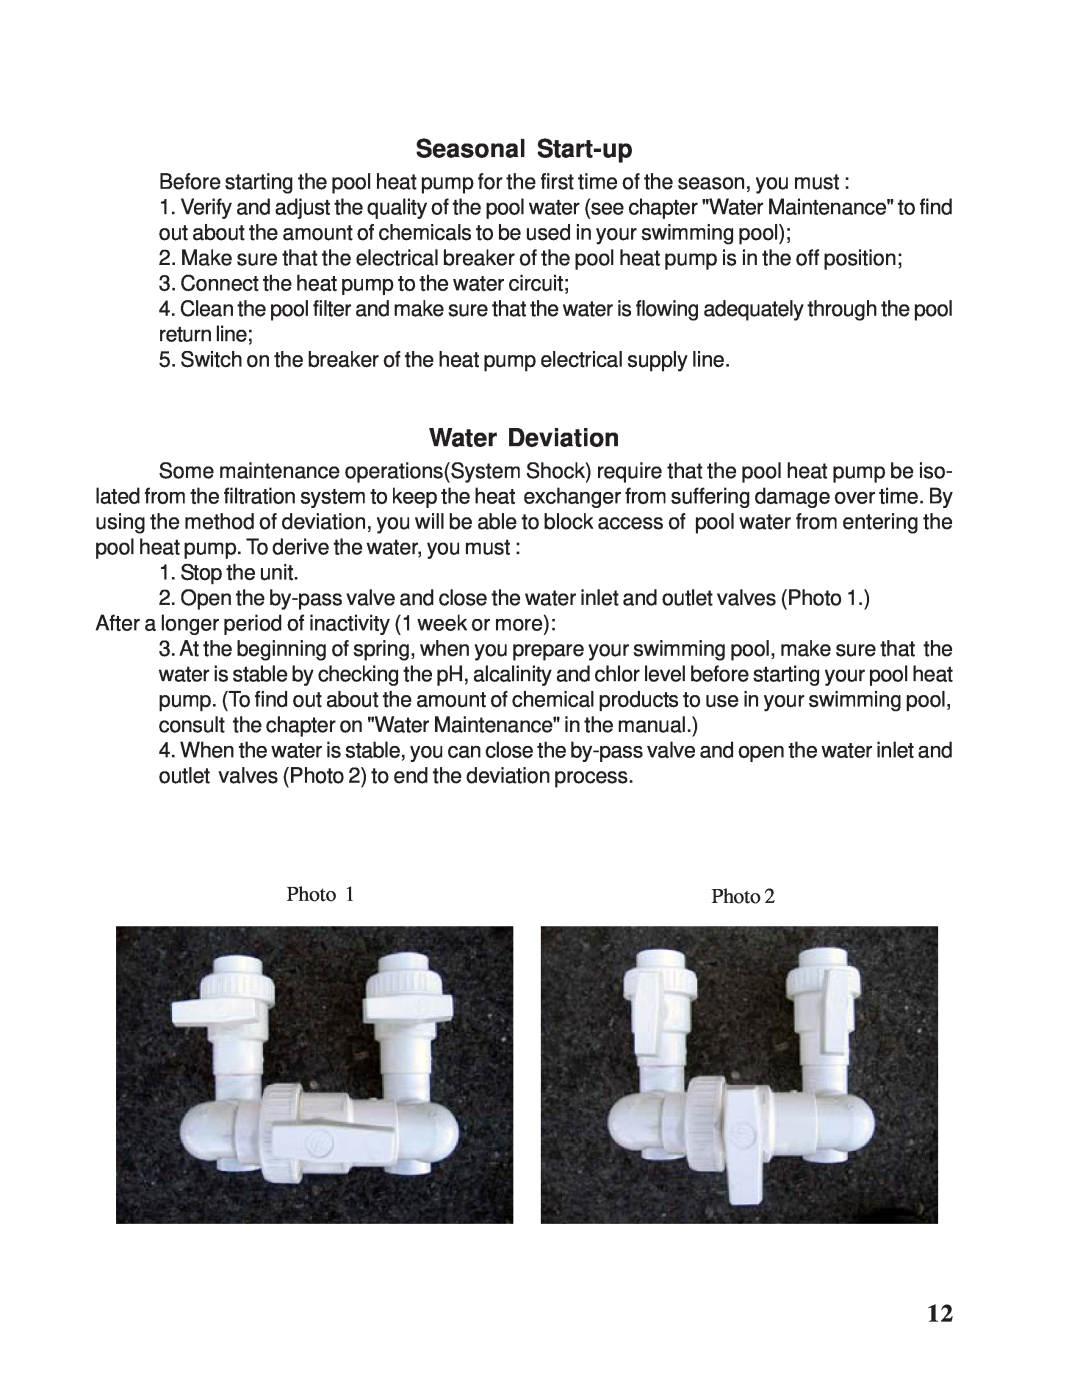 Taylor Pool Heat Pump owner manual Seasonal Start-up, Water Deviation 